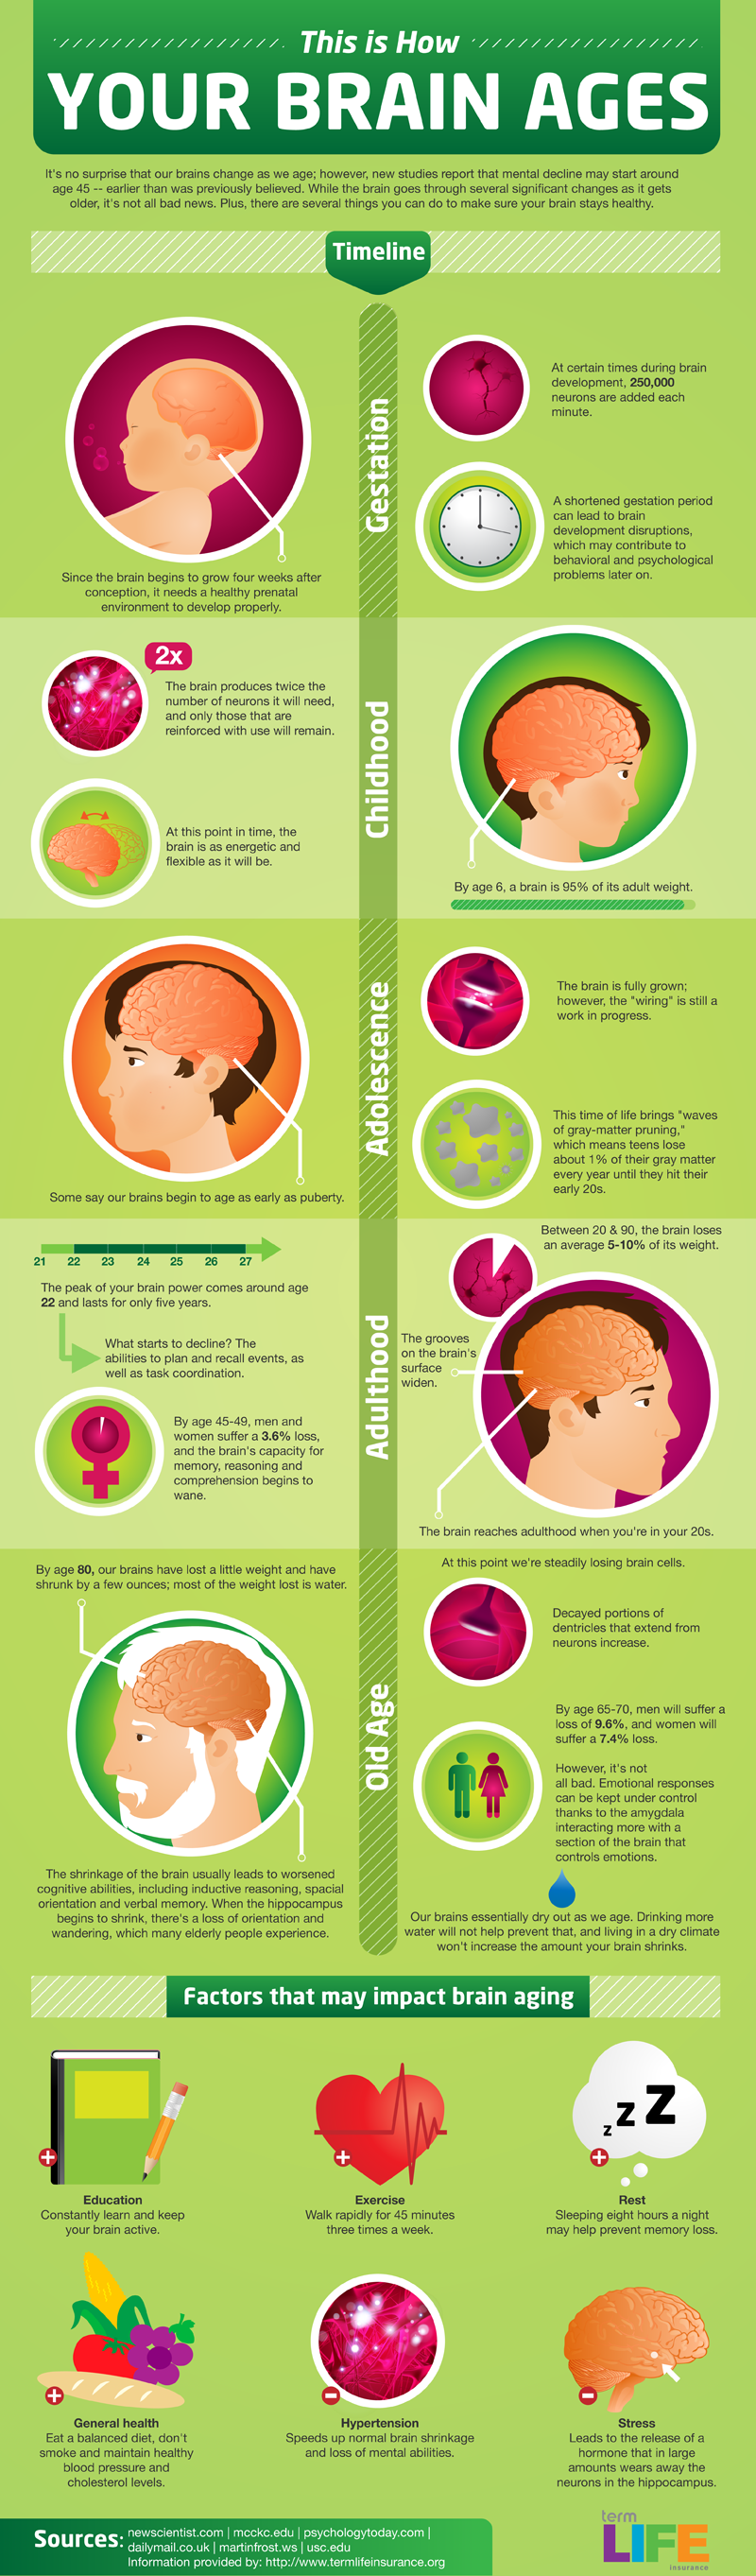 How Your Brain Ages Infographic – #Infografia #Alzheimer #Demencias